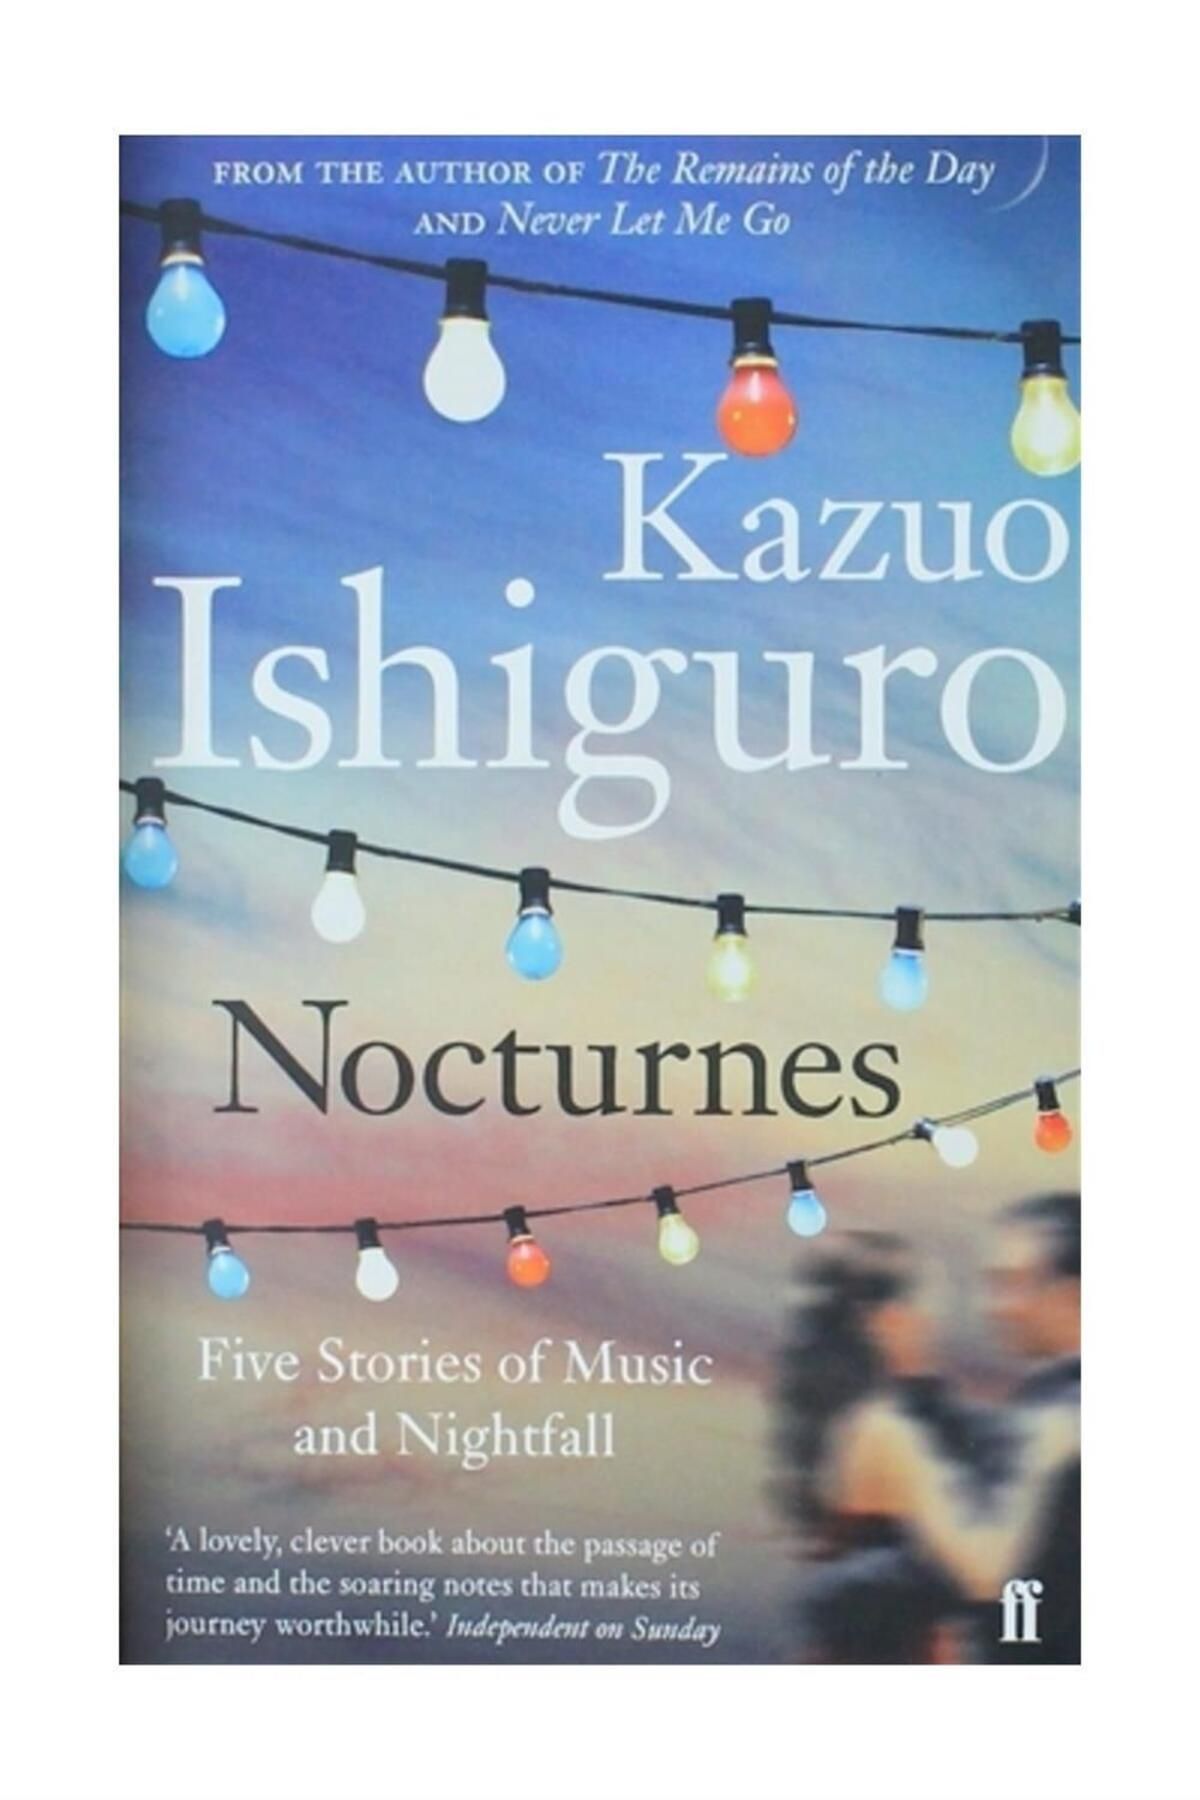 faber And Faber Nocturnes - Kazuo Ishiguro